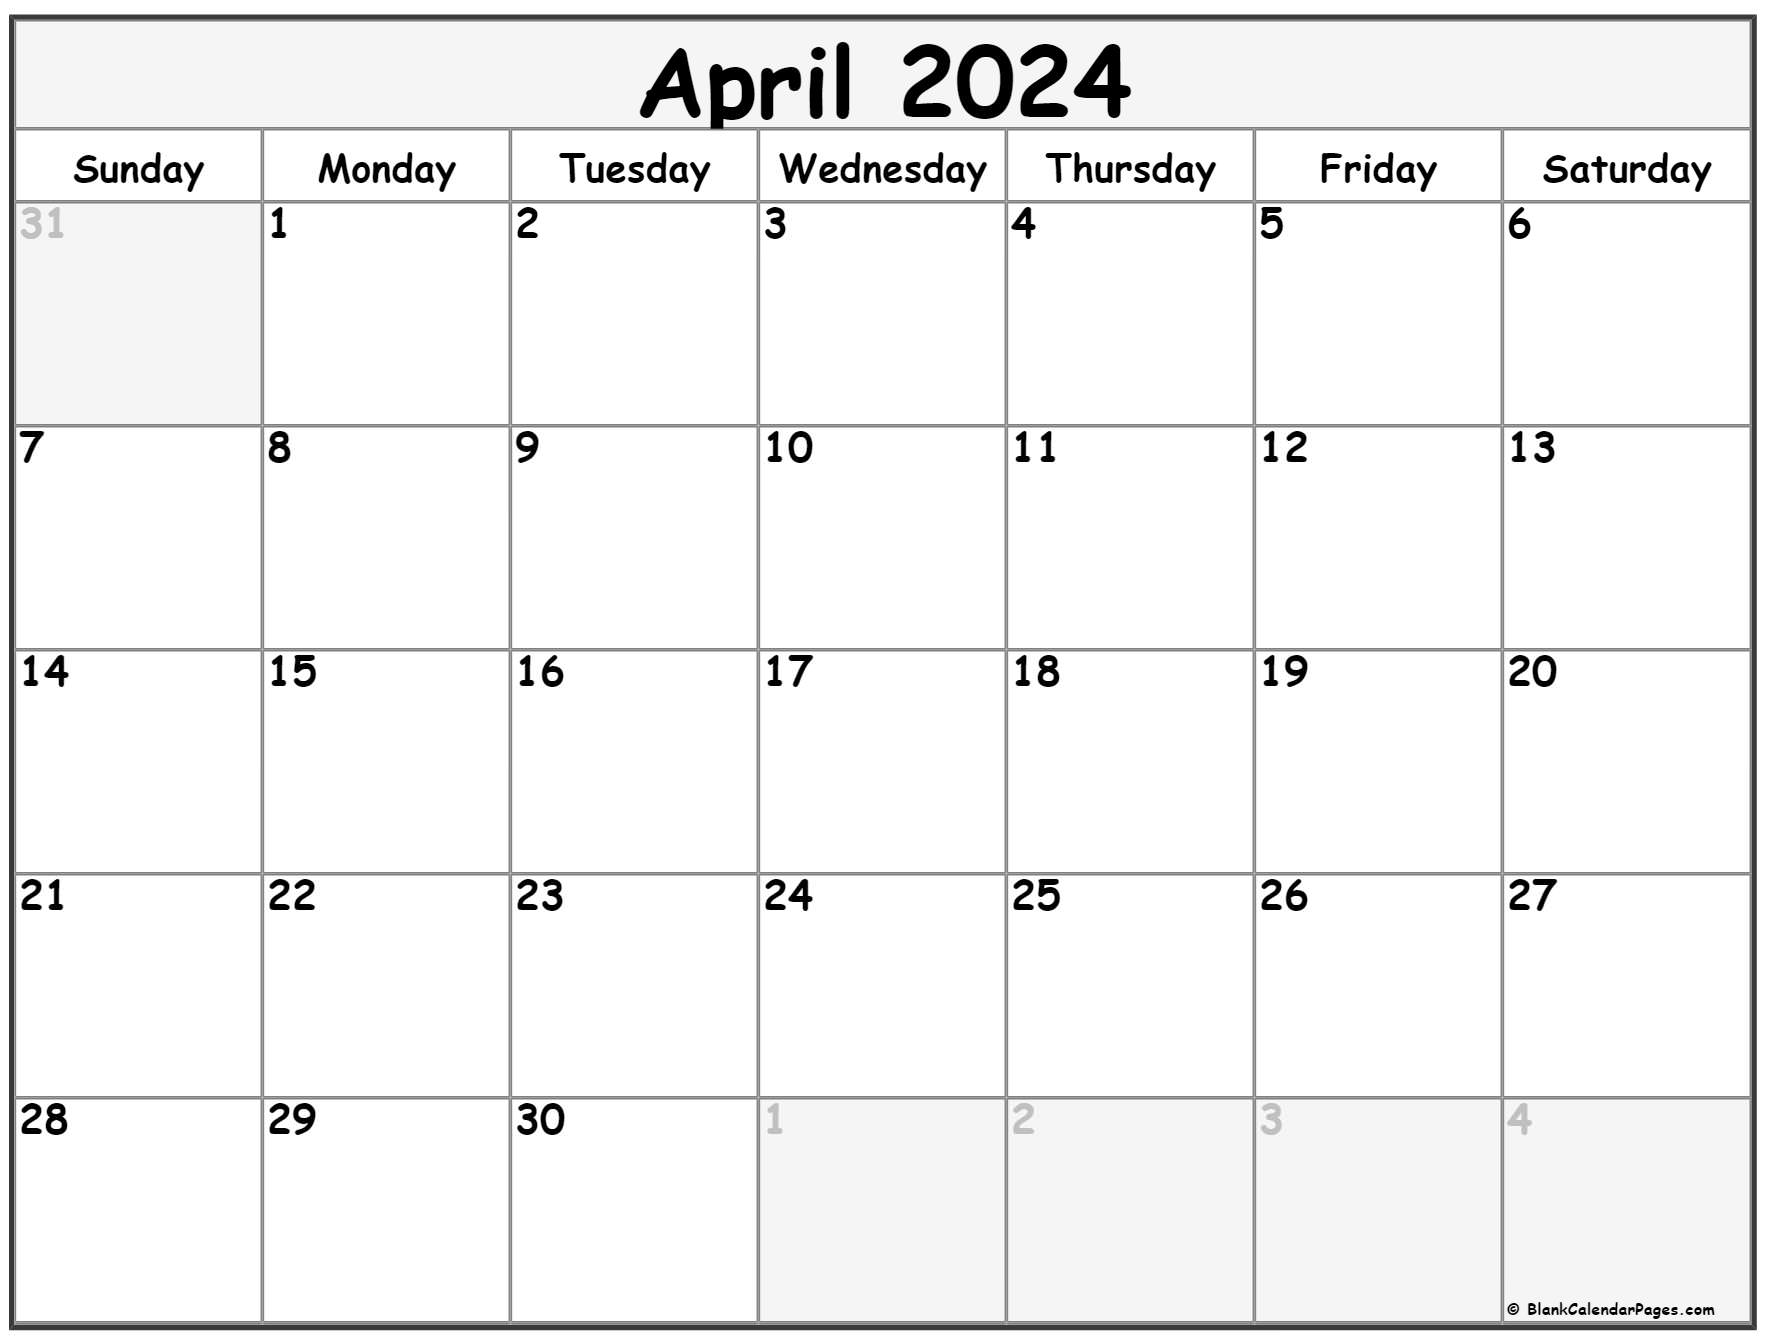 April 2024 calendar free printable calendar